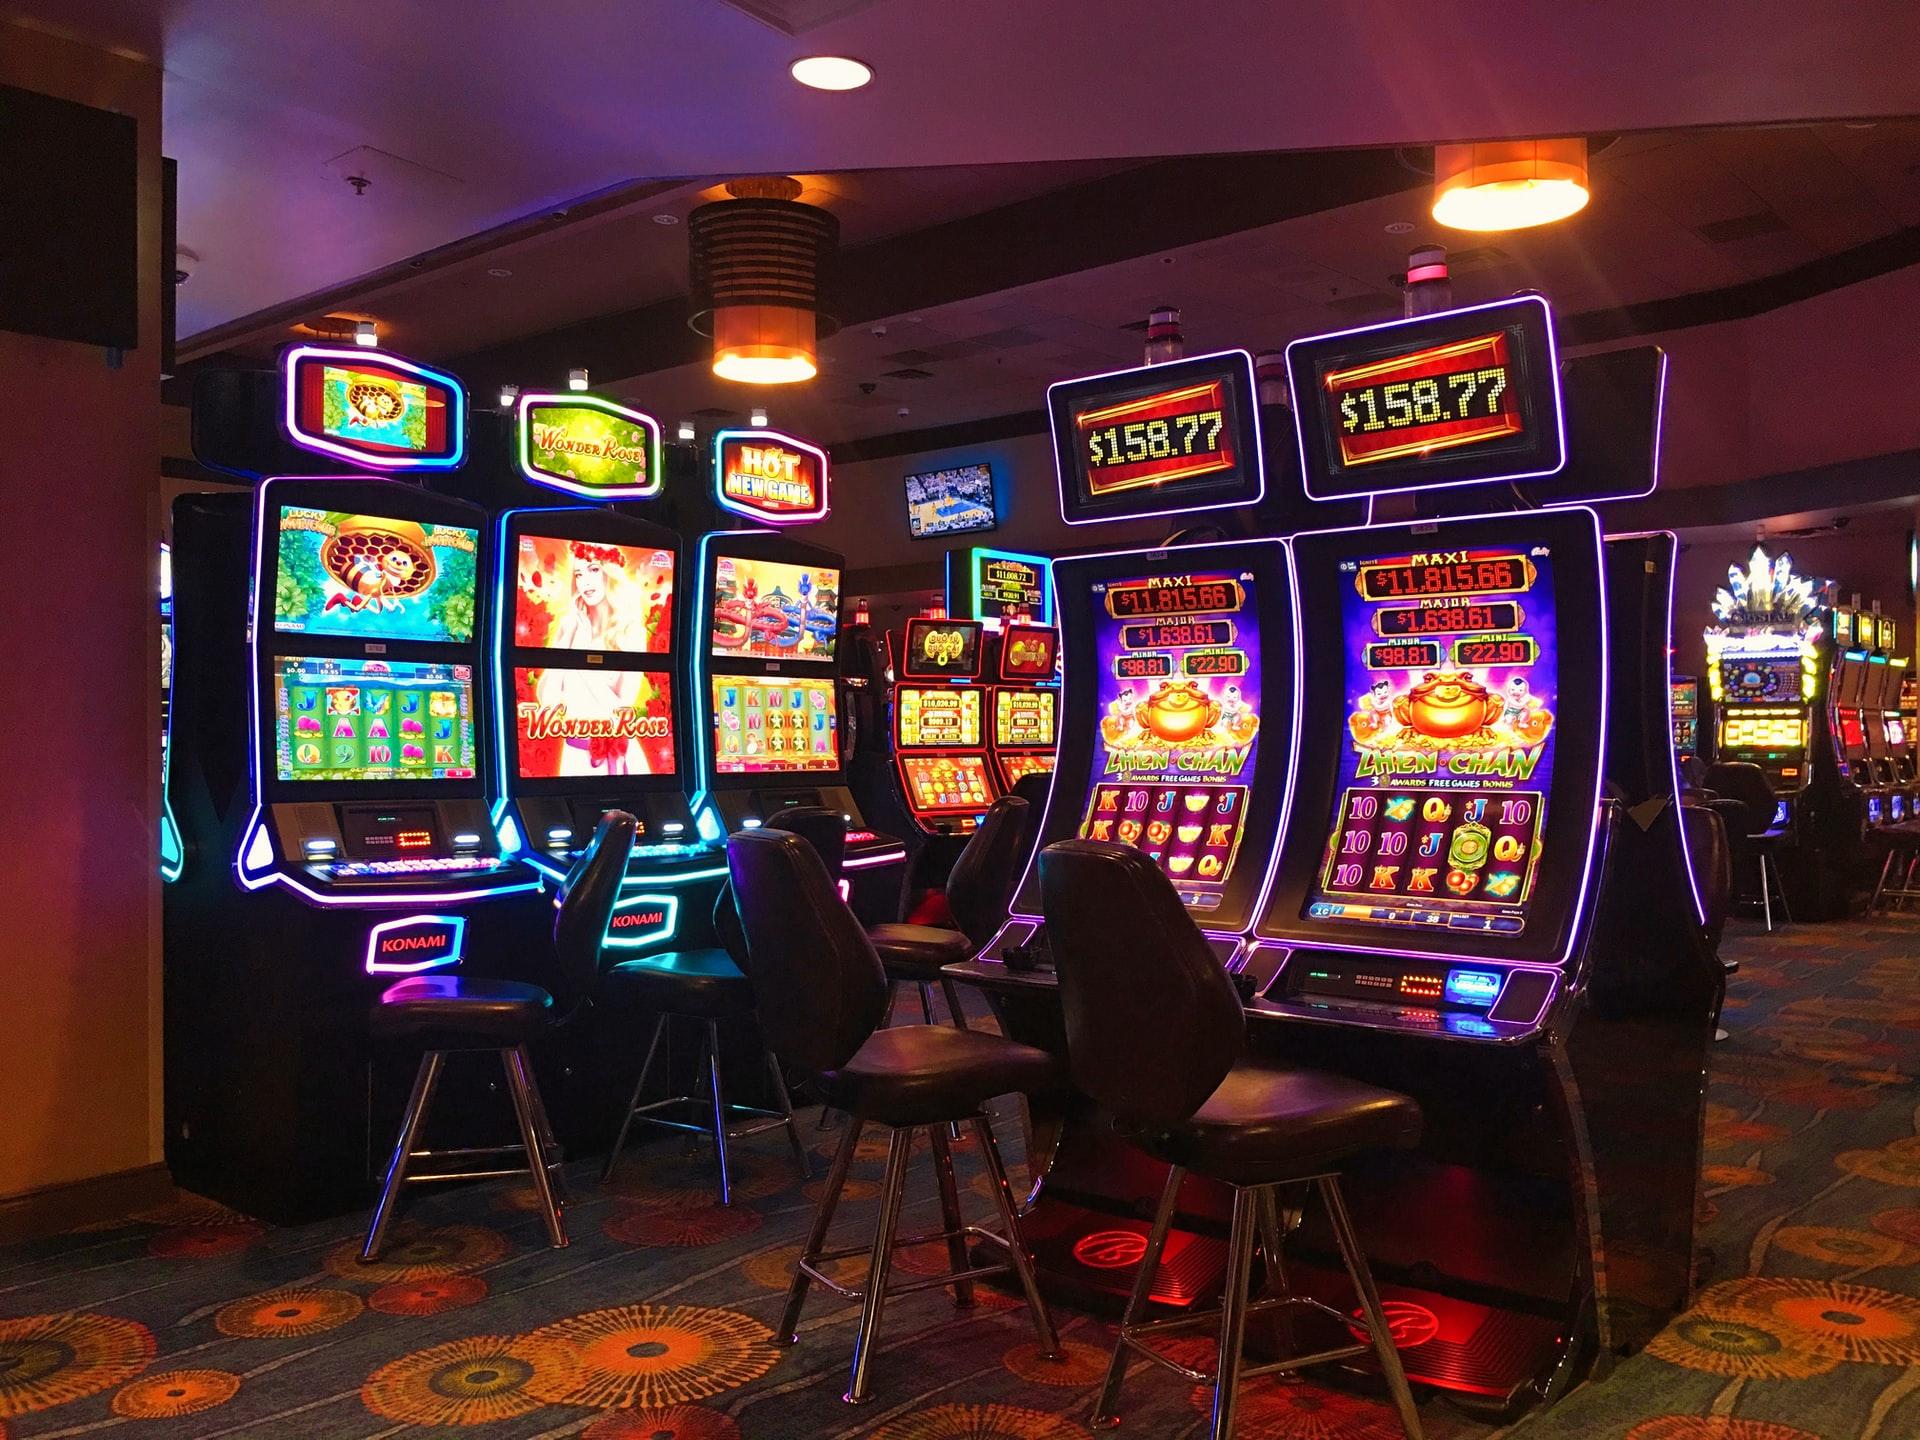 Time to Rethink Gambling Addiction